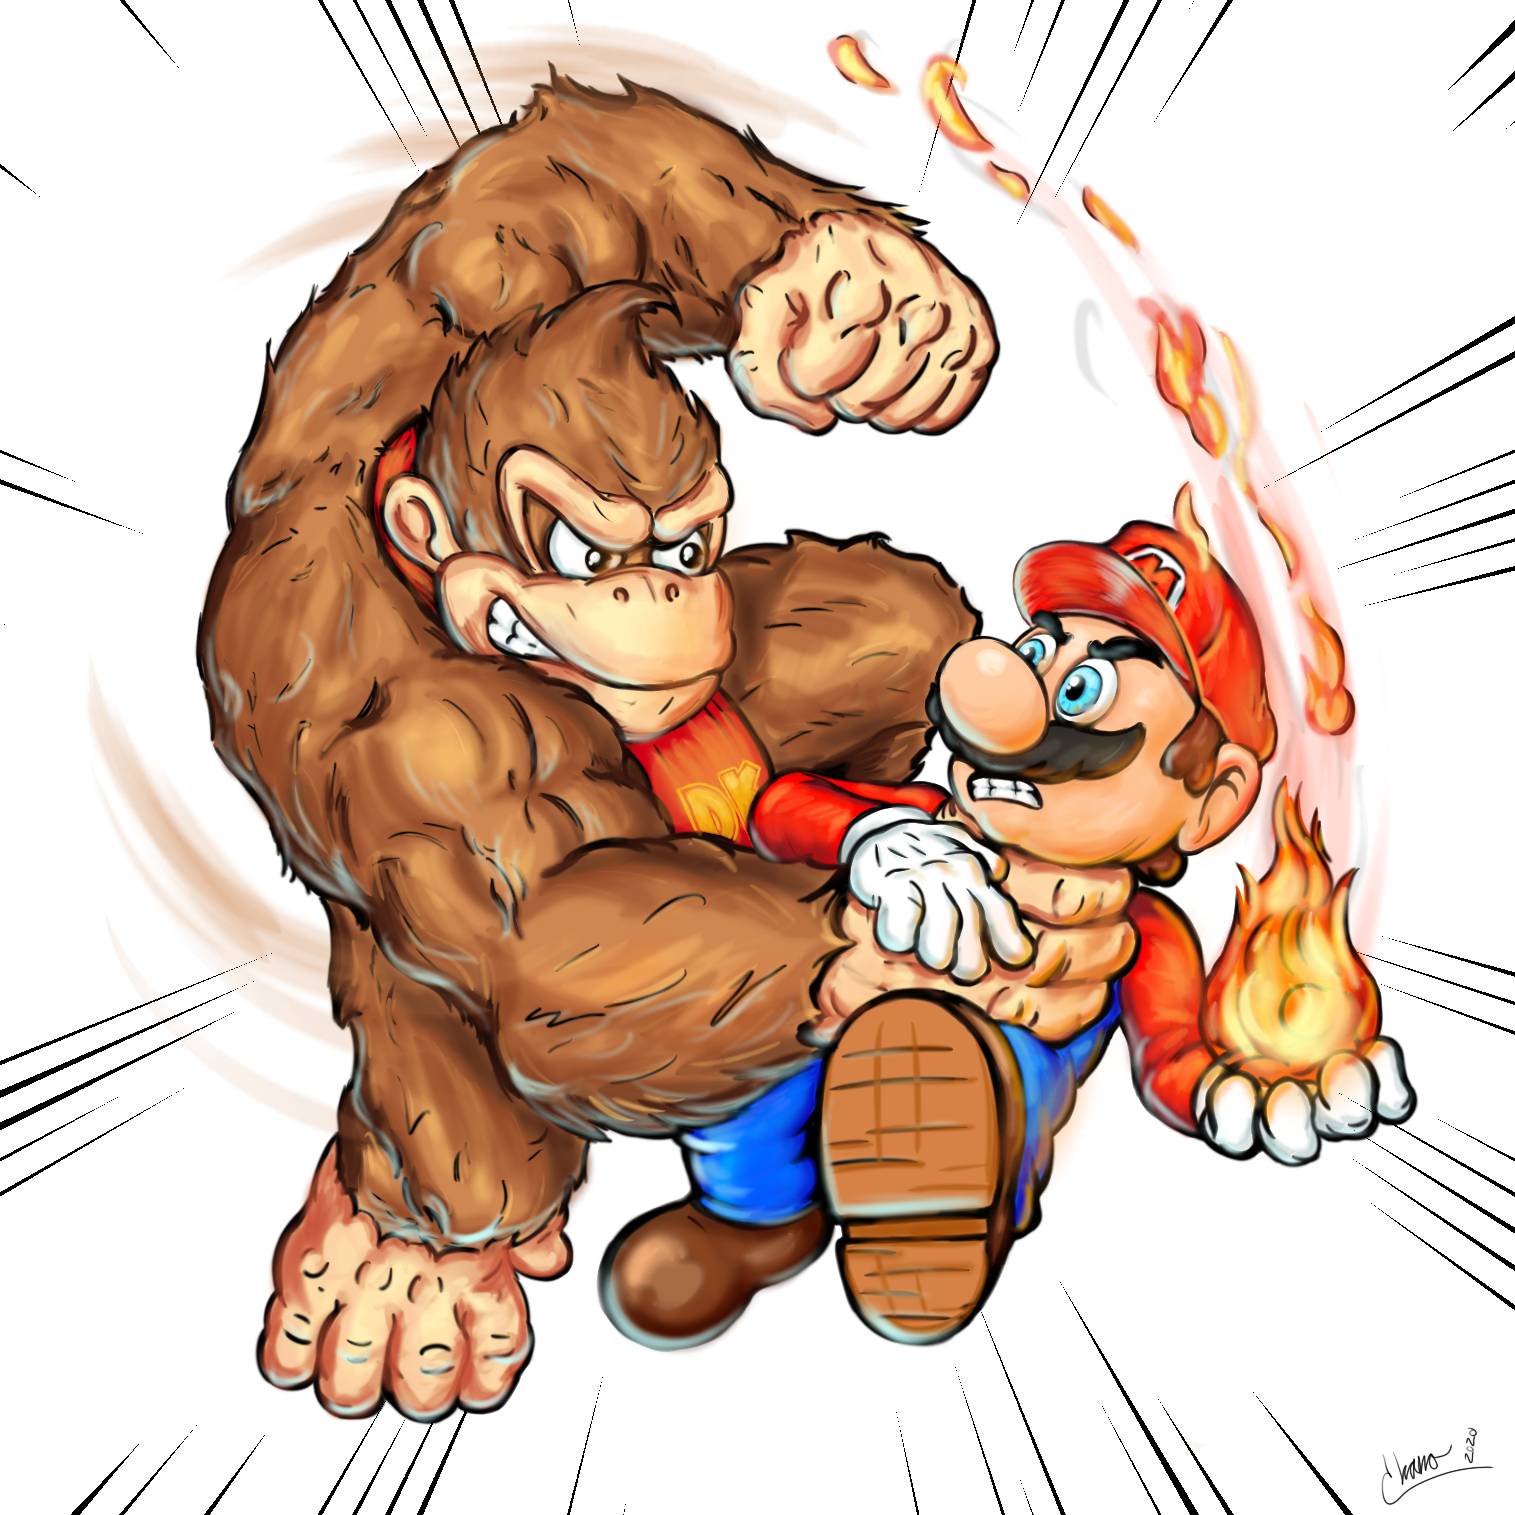 Mario vs. Donkey Kong - A Rivalry Revival (UPDATE) by SarhanXG on DeviantArt